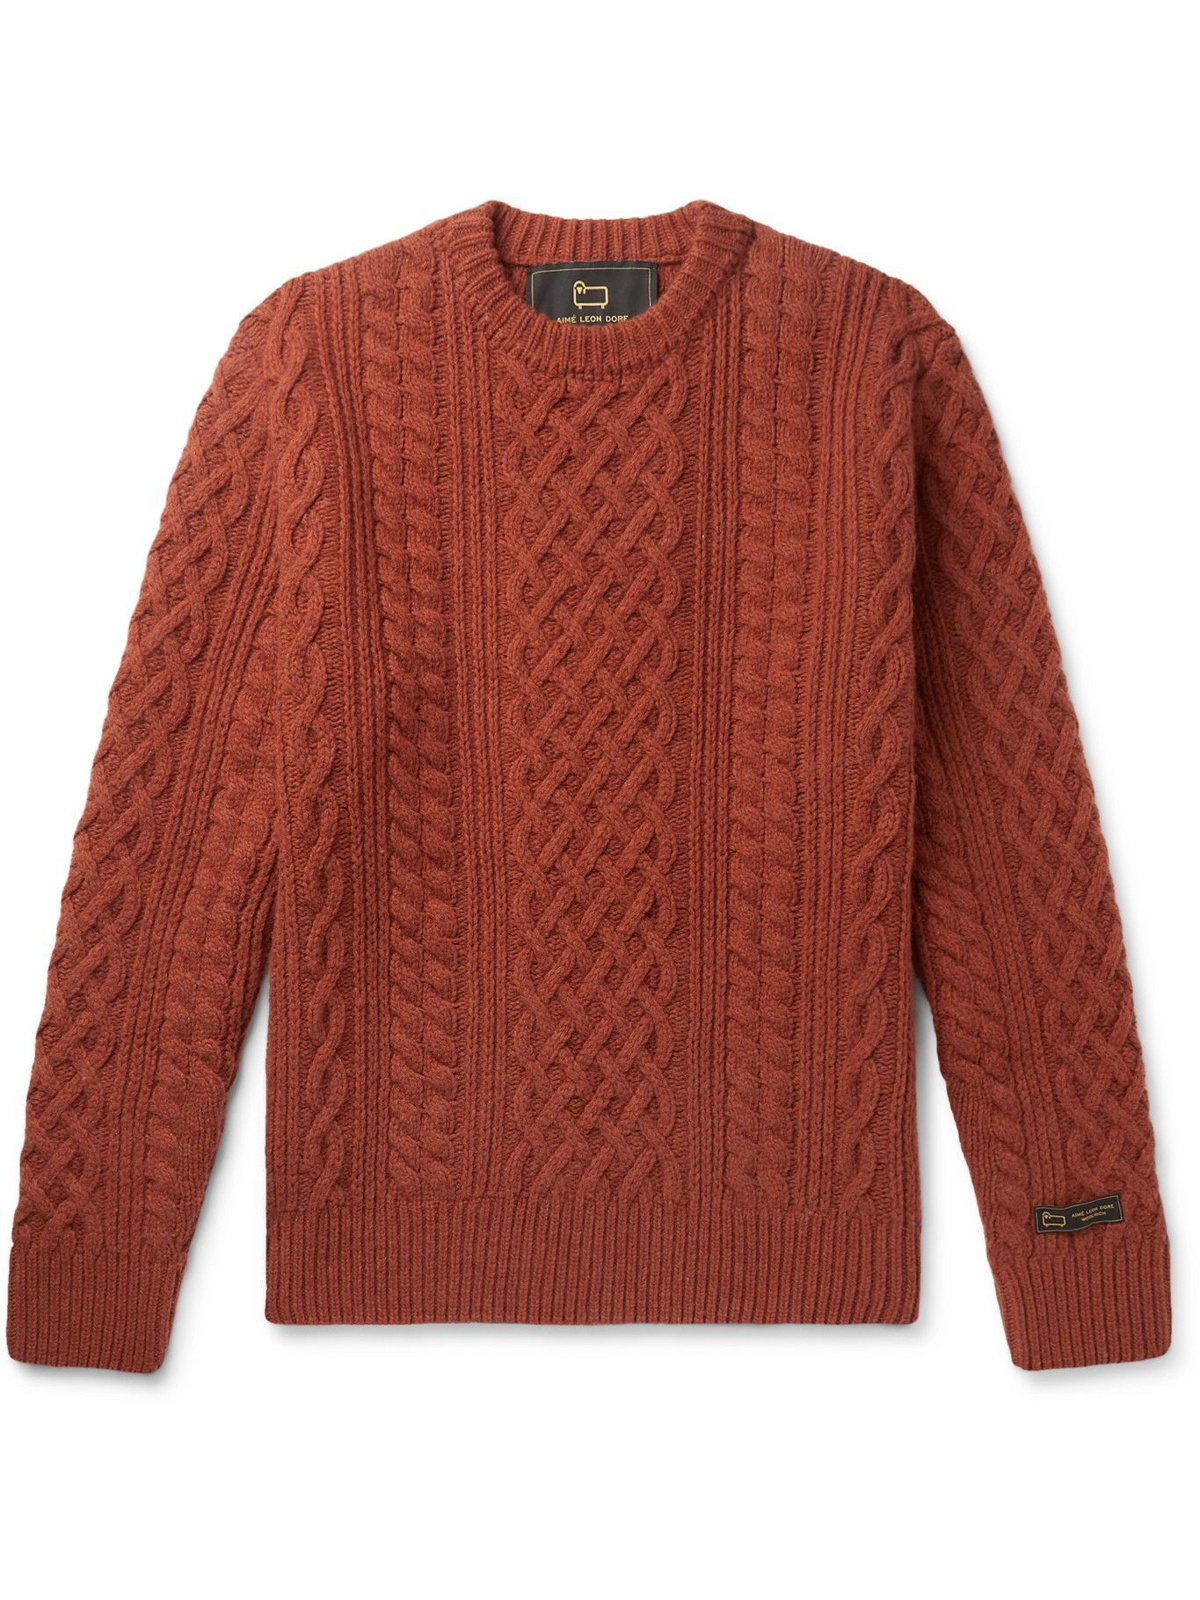 AIMÉ LEON DORE - Woolrich Cable-Knit Wool Sweater - Orange